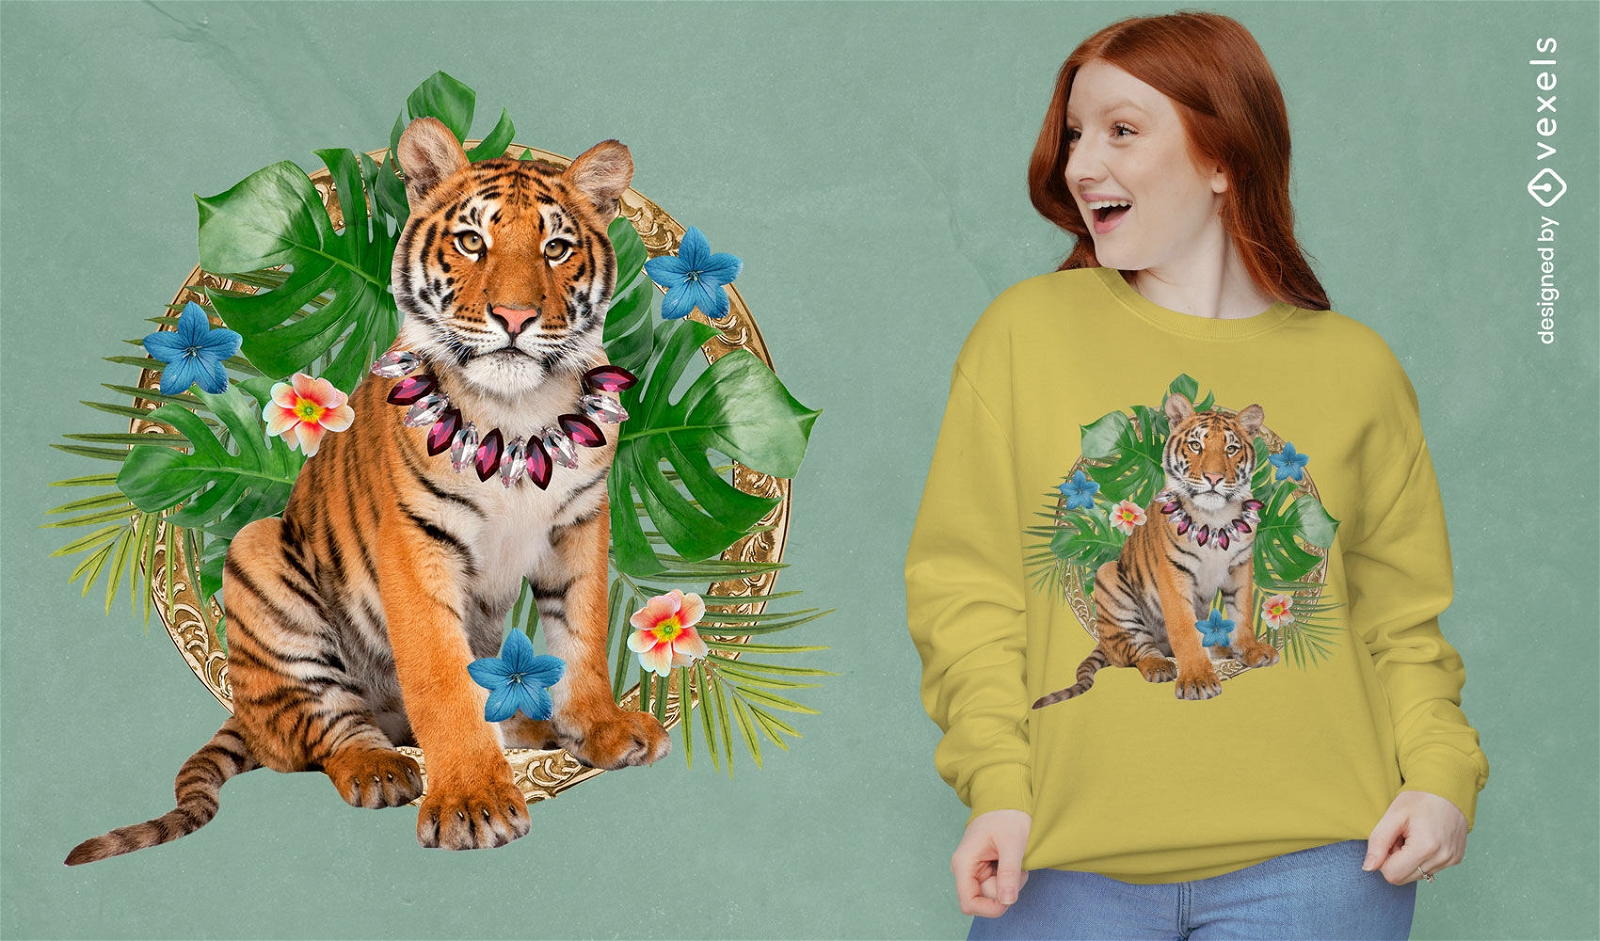 Animal tigre beb? con camiseta de flores psd